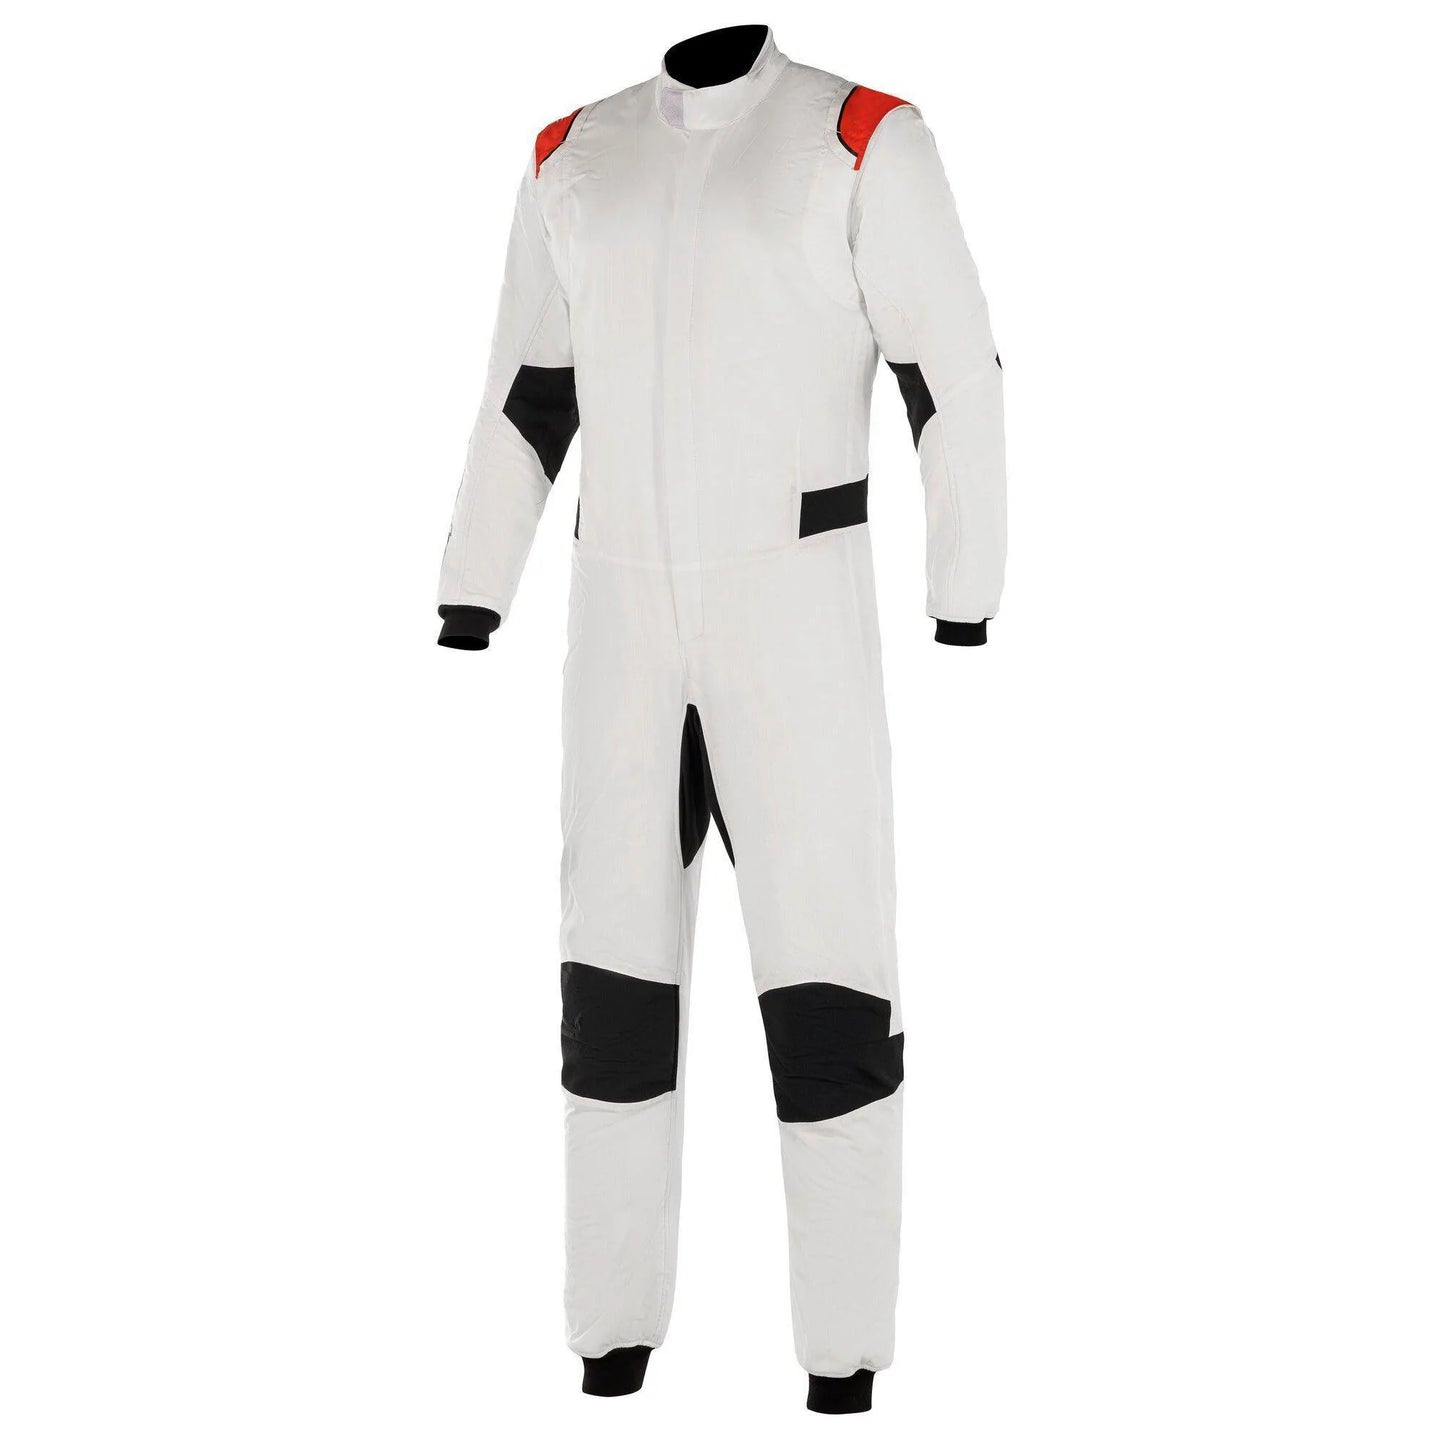 Nomex Race Suit, Double Layered